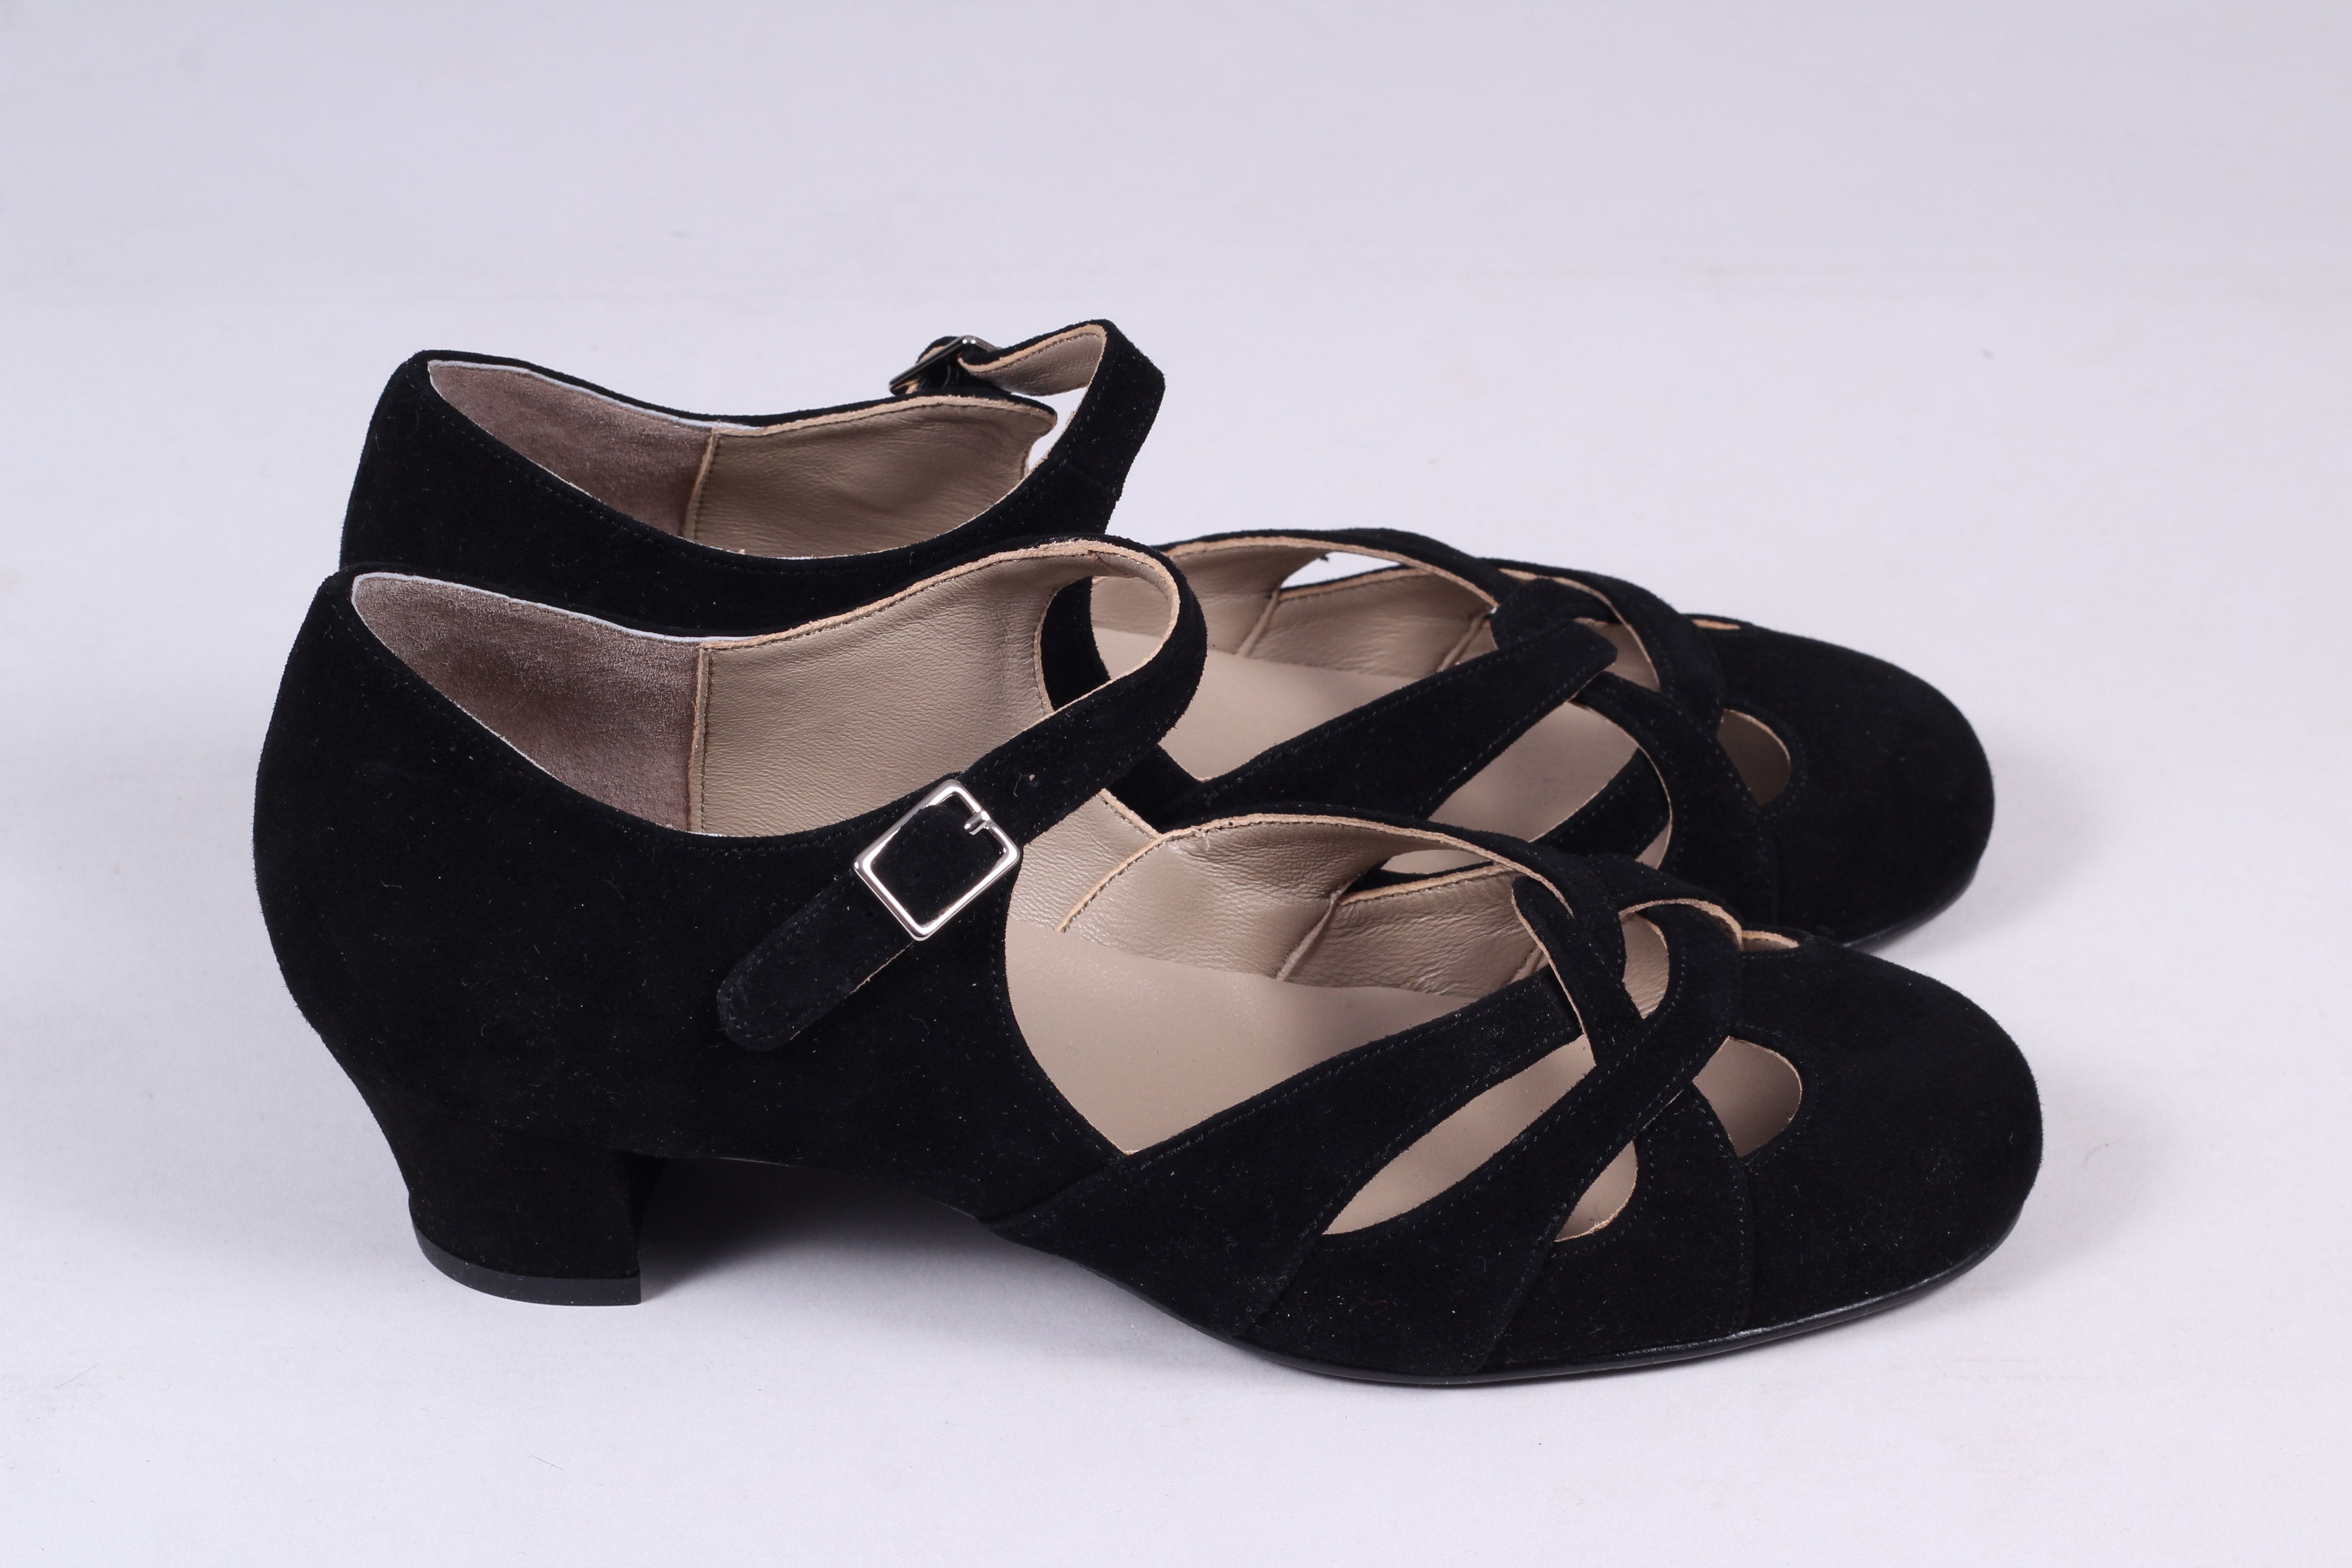 Everyday 1930s /1940s style suede sandals - Black - Ida